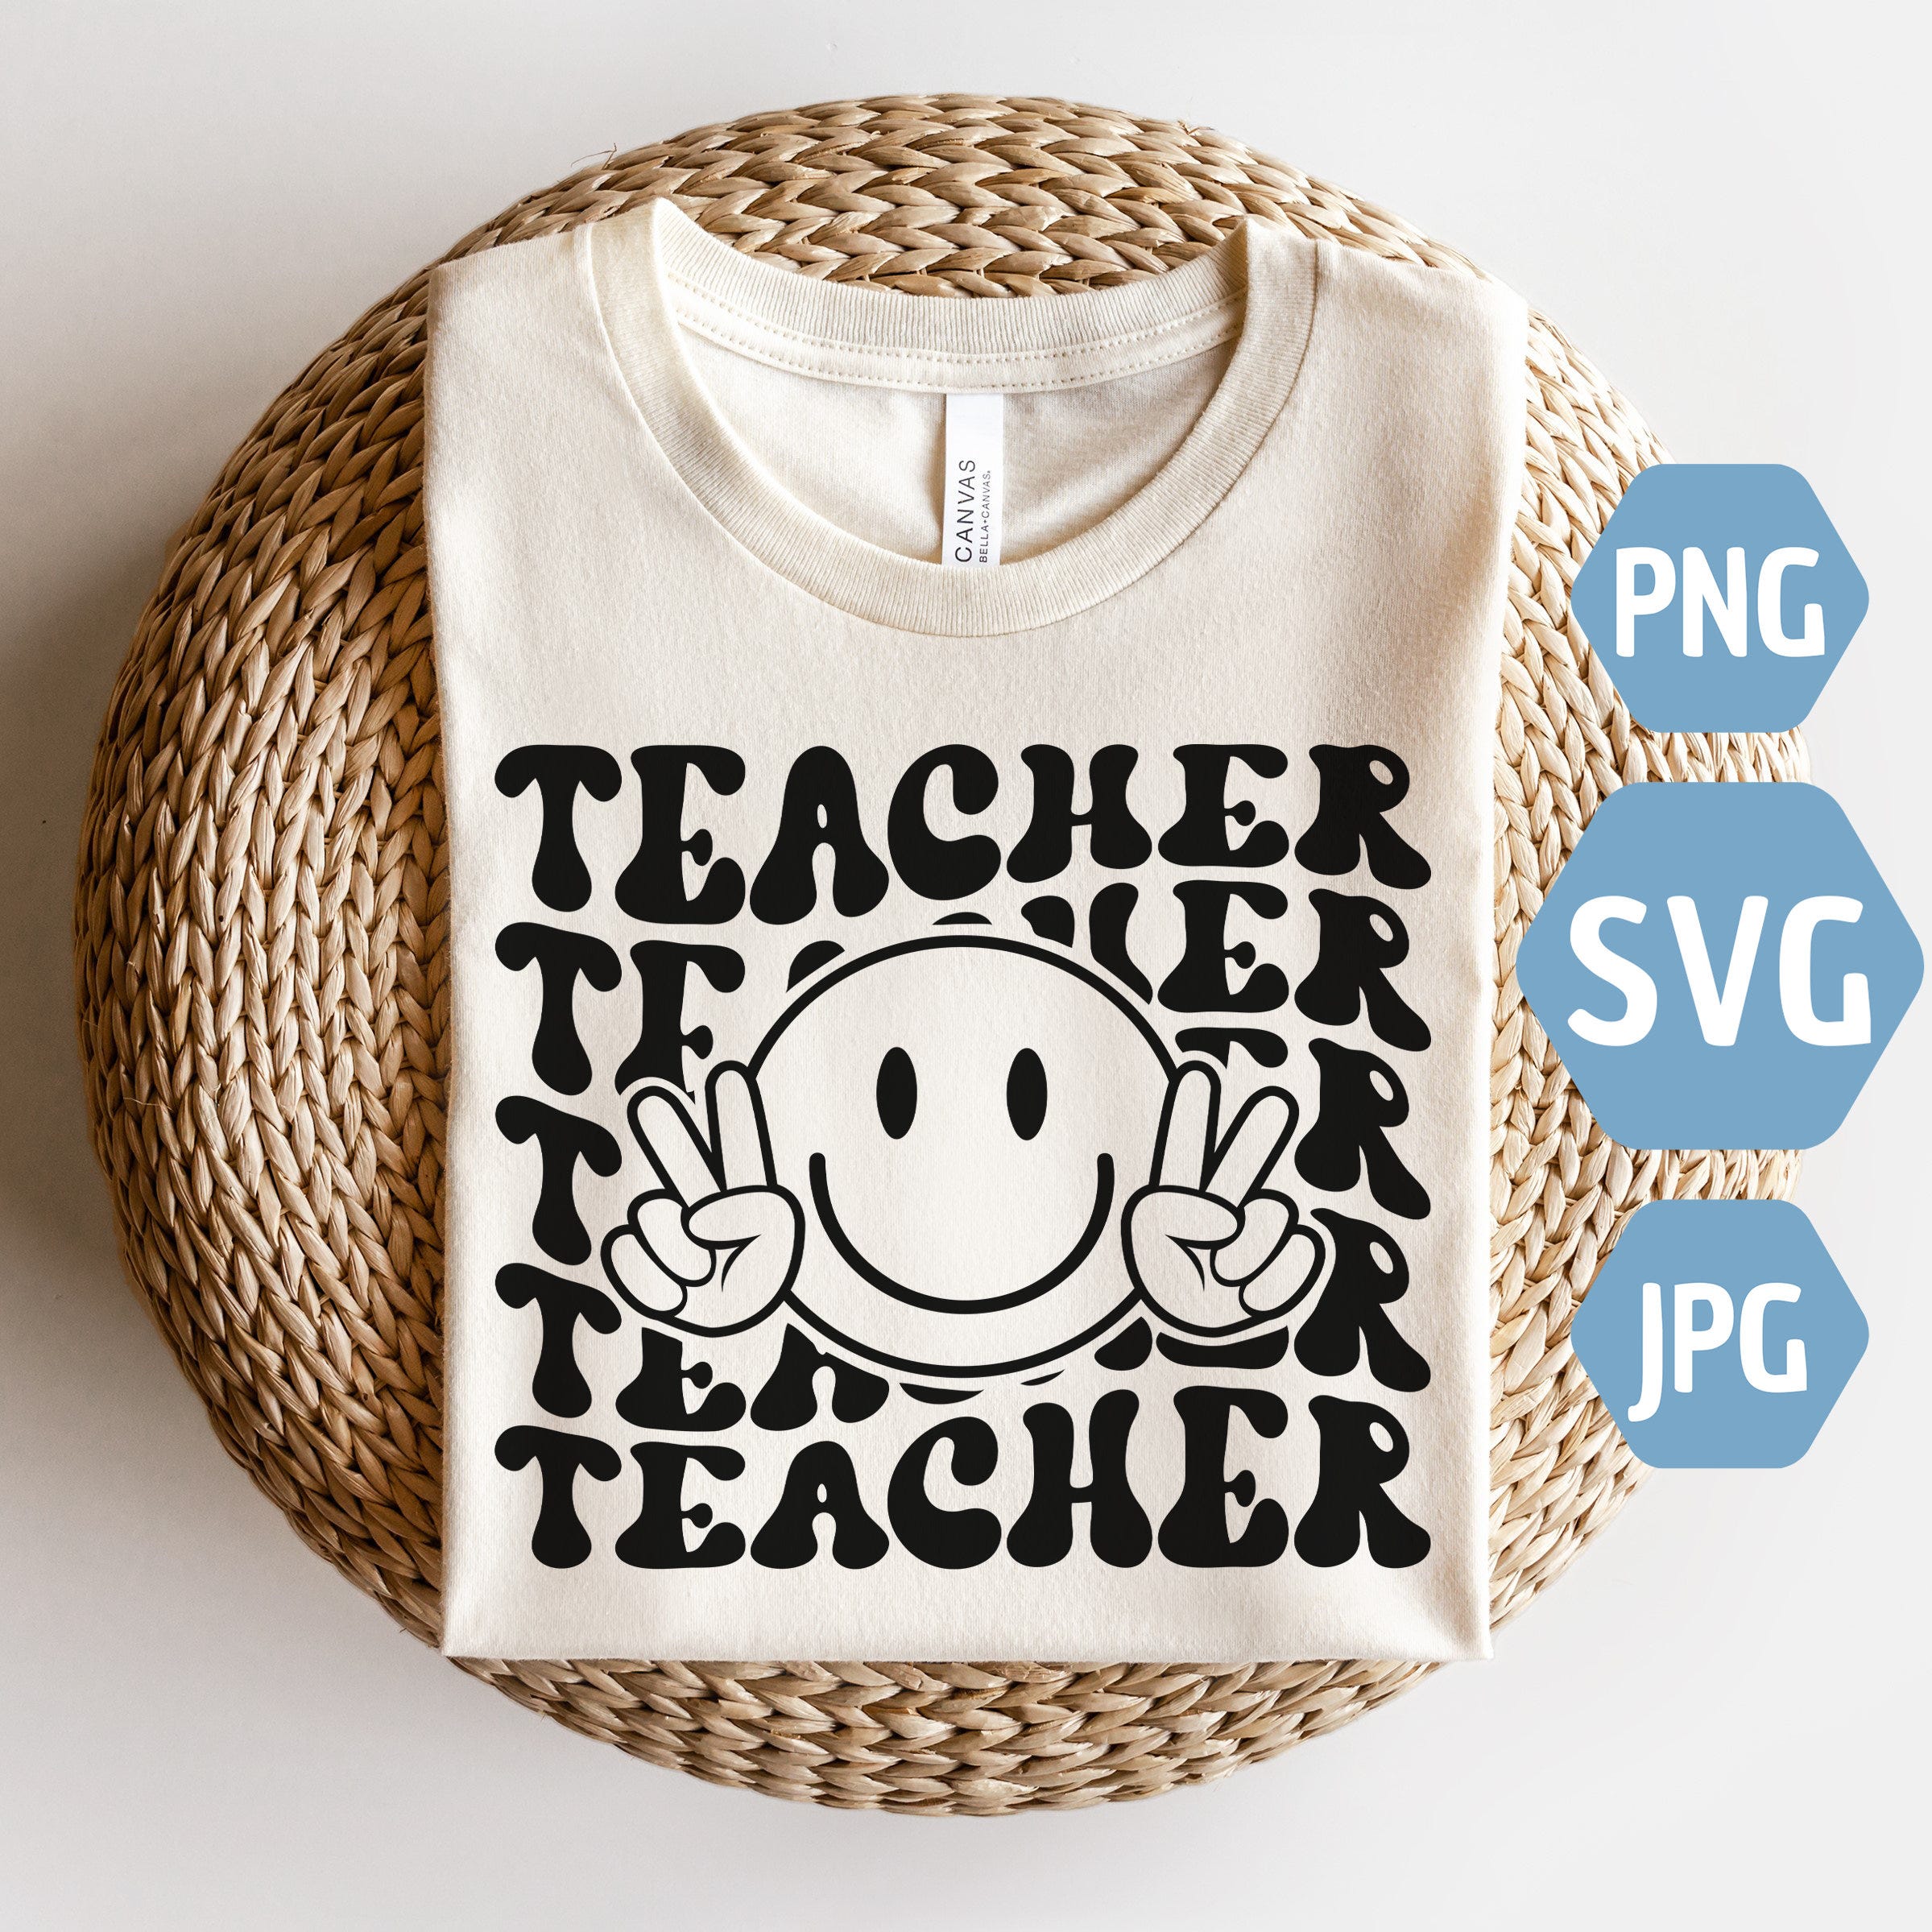 Teacher Svg, Back to School Svg, Retro Smile SVG and PNG, Teacher life svg, Smile face svg, Cute Teacher Shirt, Teacher Curvy, Teaching